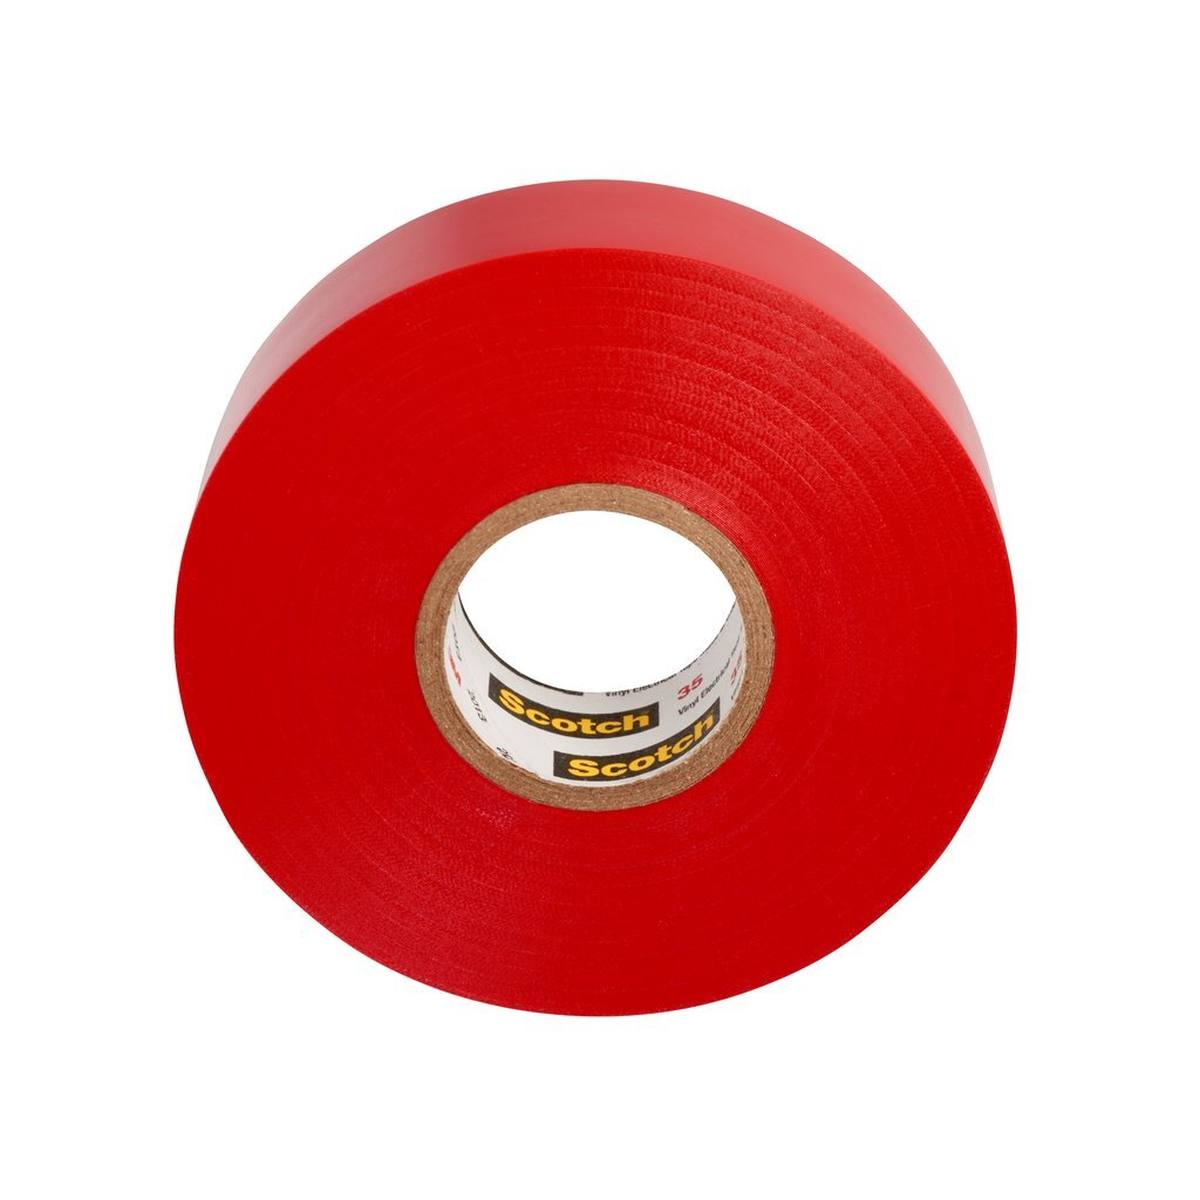 3M Scotch 35 vinyl electrical insulating tape, red, 19 mm x 20 m, 0.18 mm